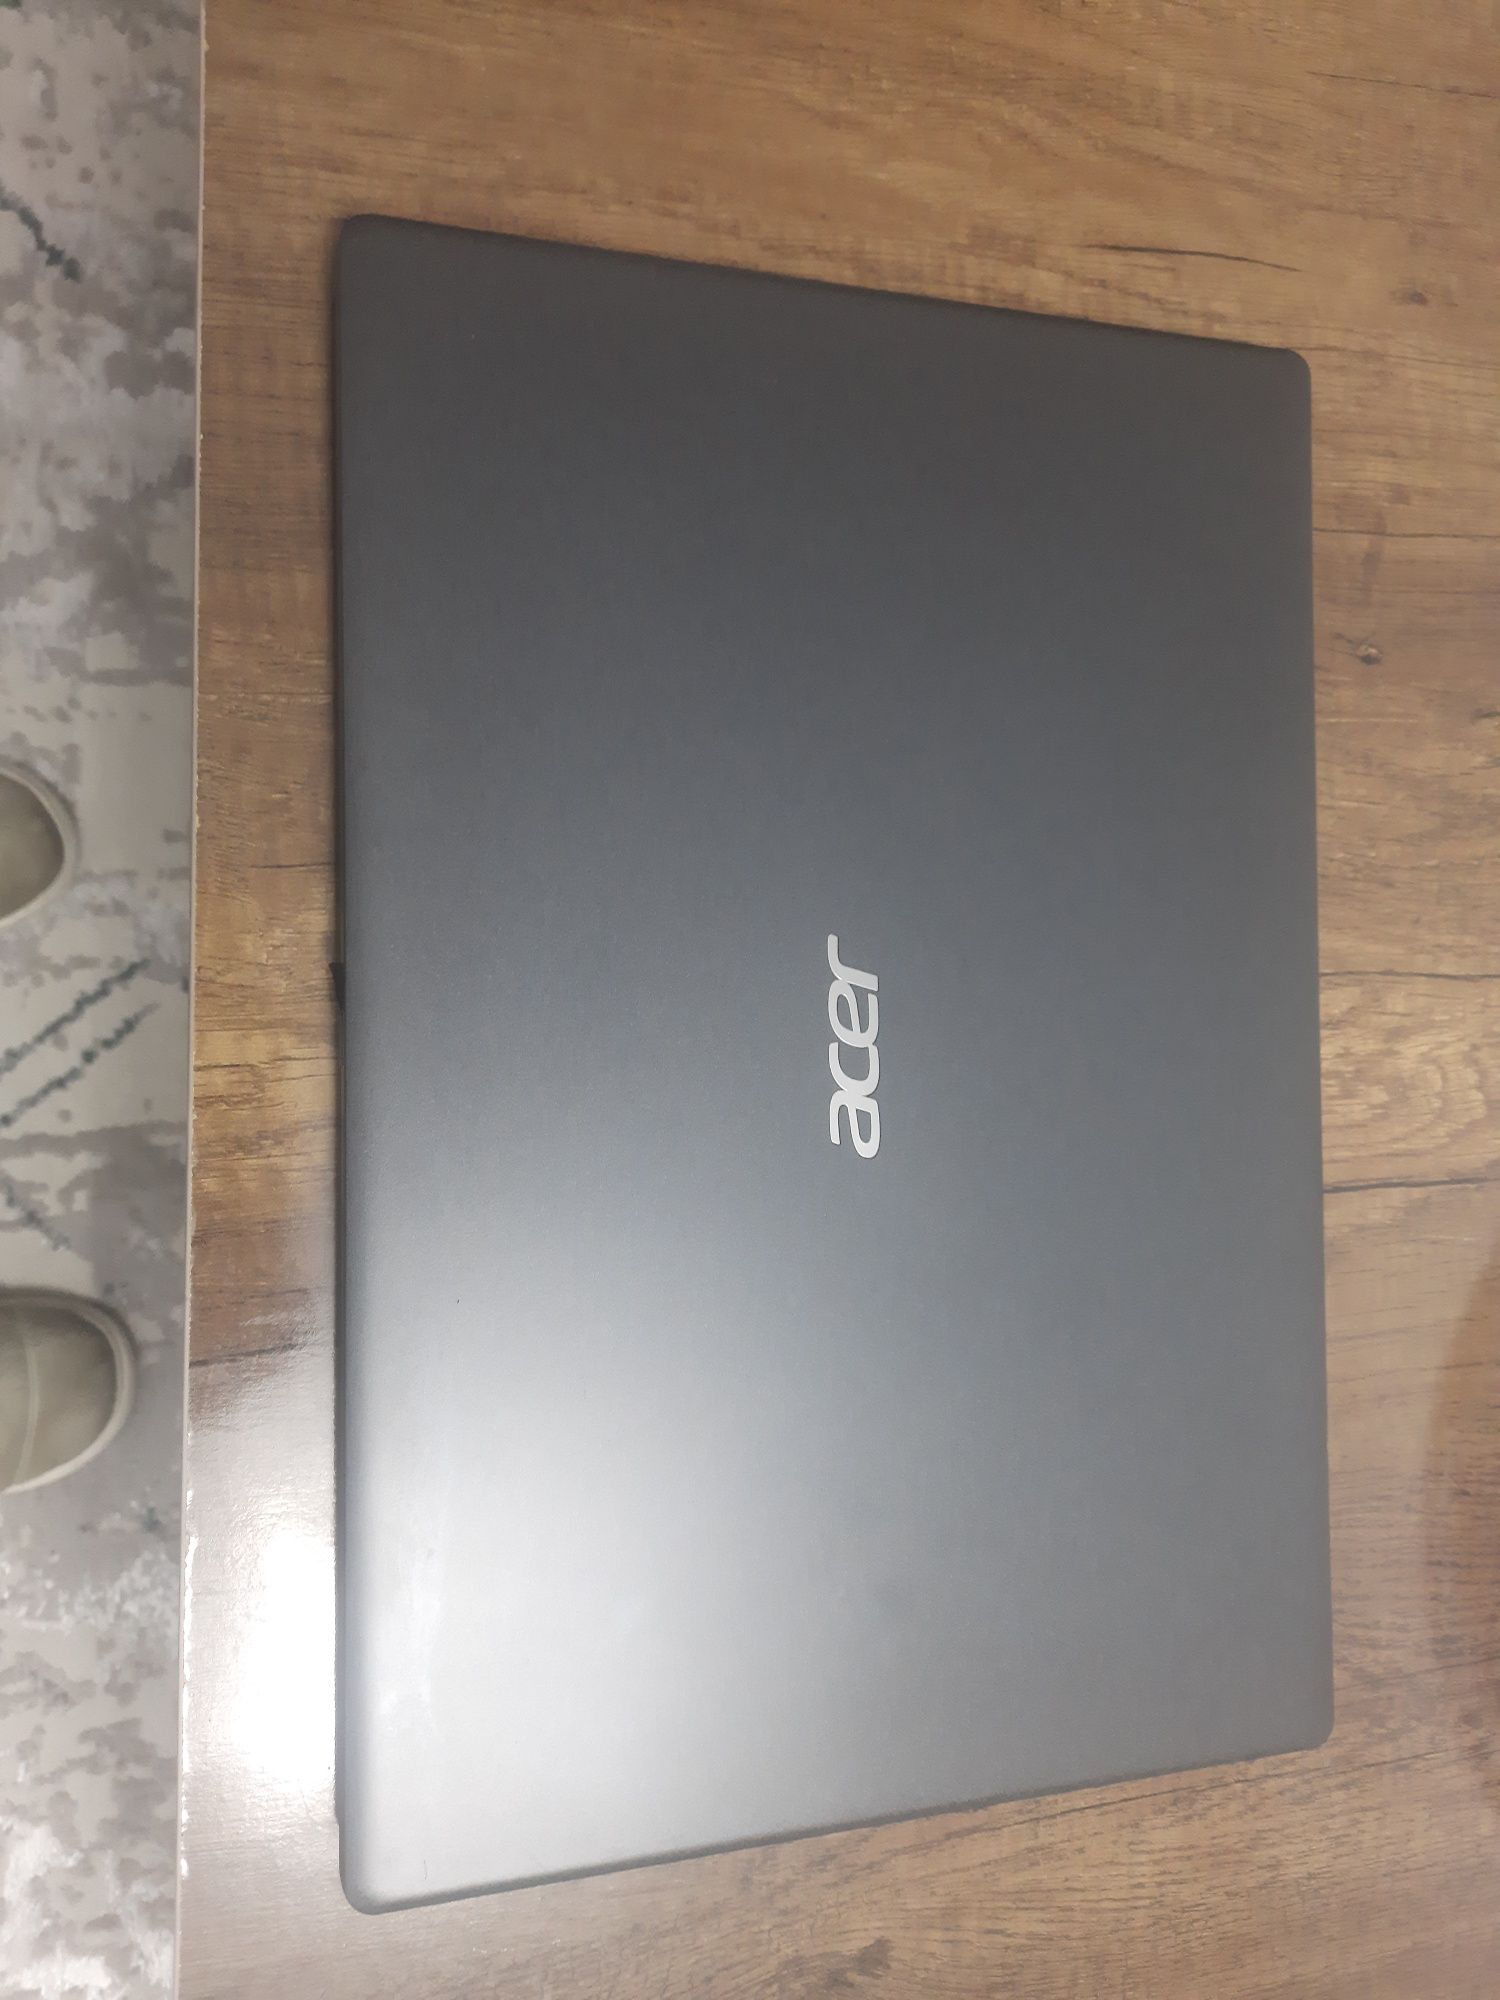 Acer core i7 ,nvidia - ноутбук, в отличном состоянии